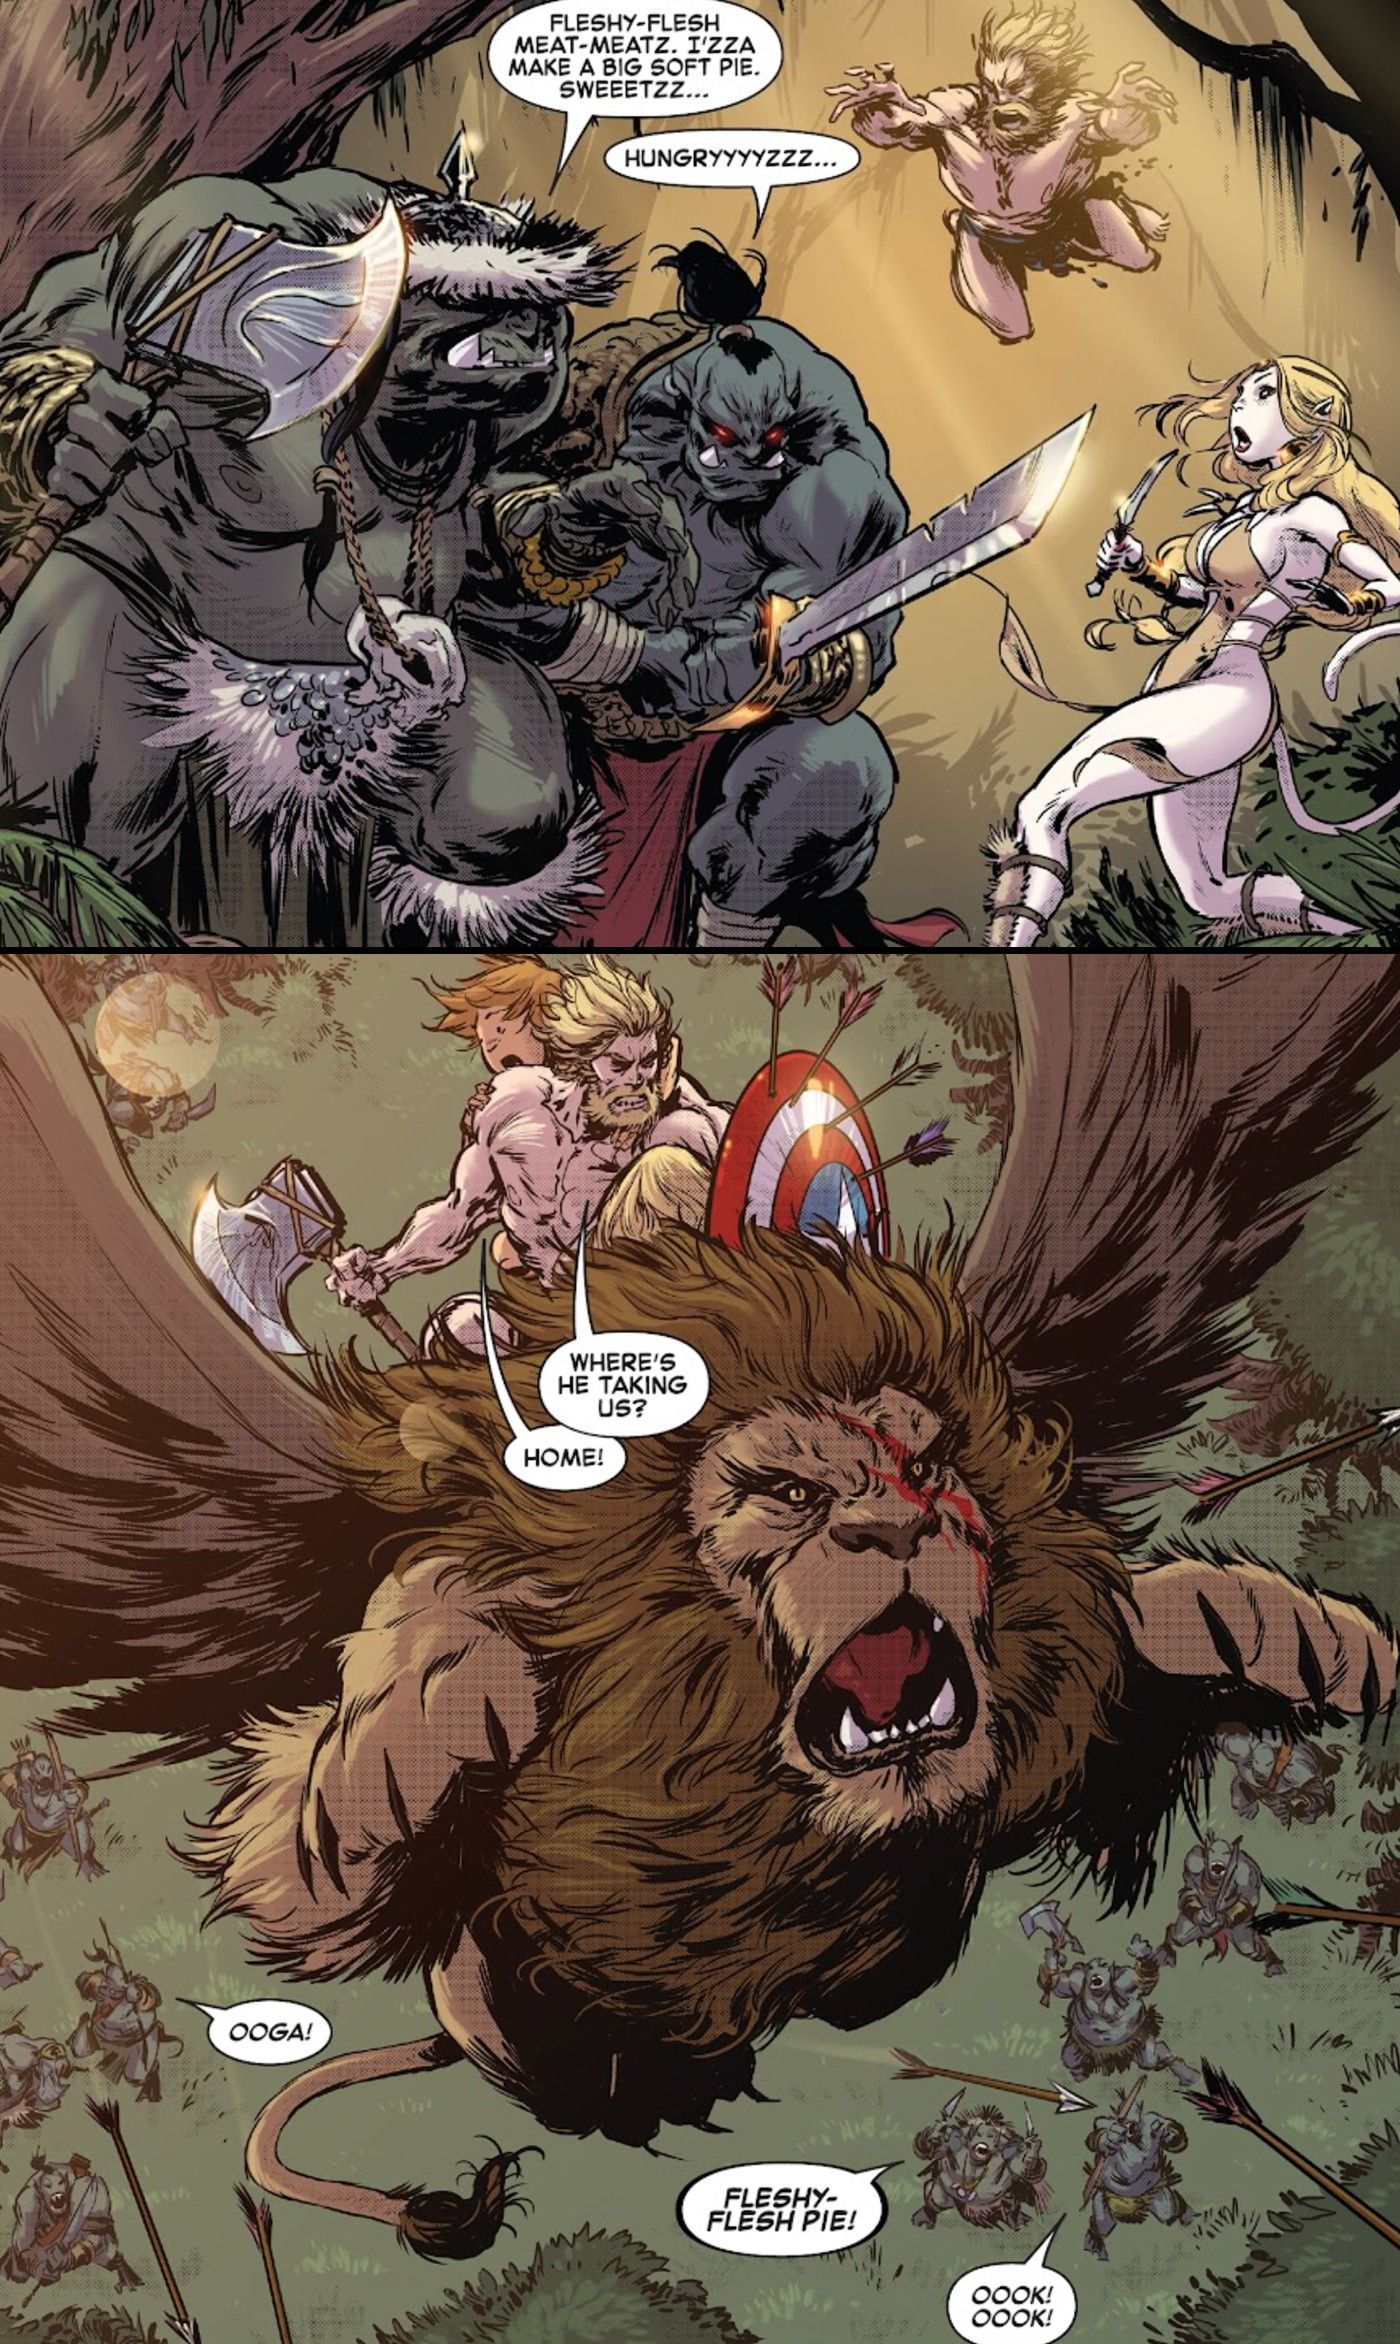 Captain Americas Amazing Fantasy Villains Are Offensive Caricatures